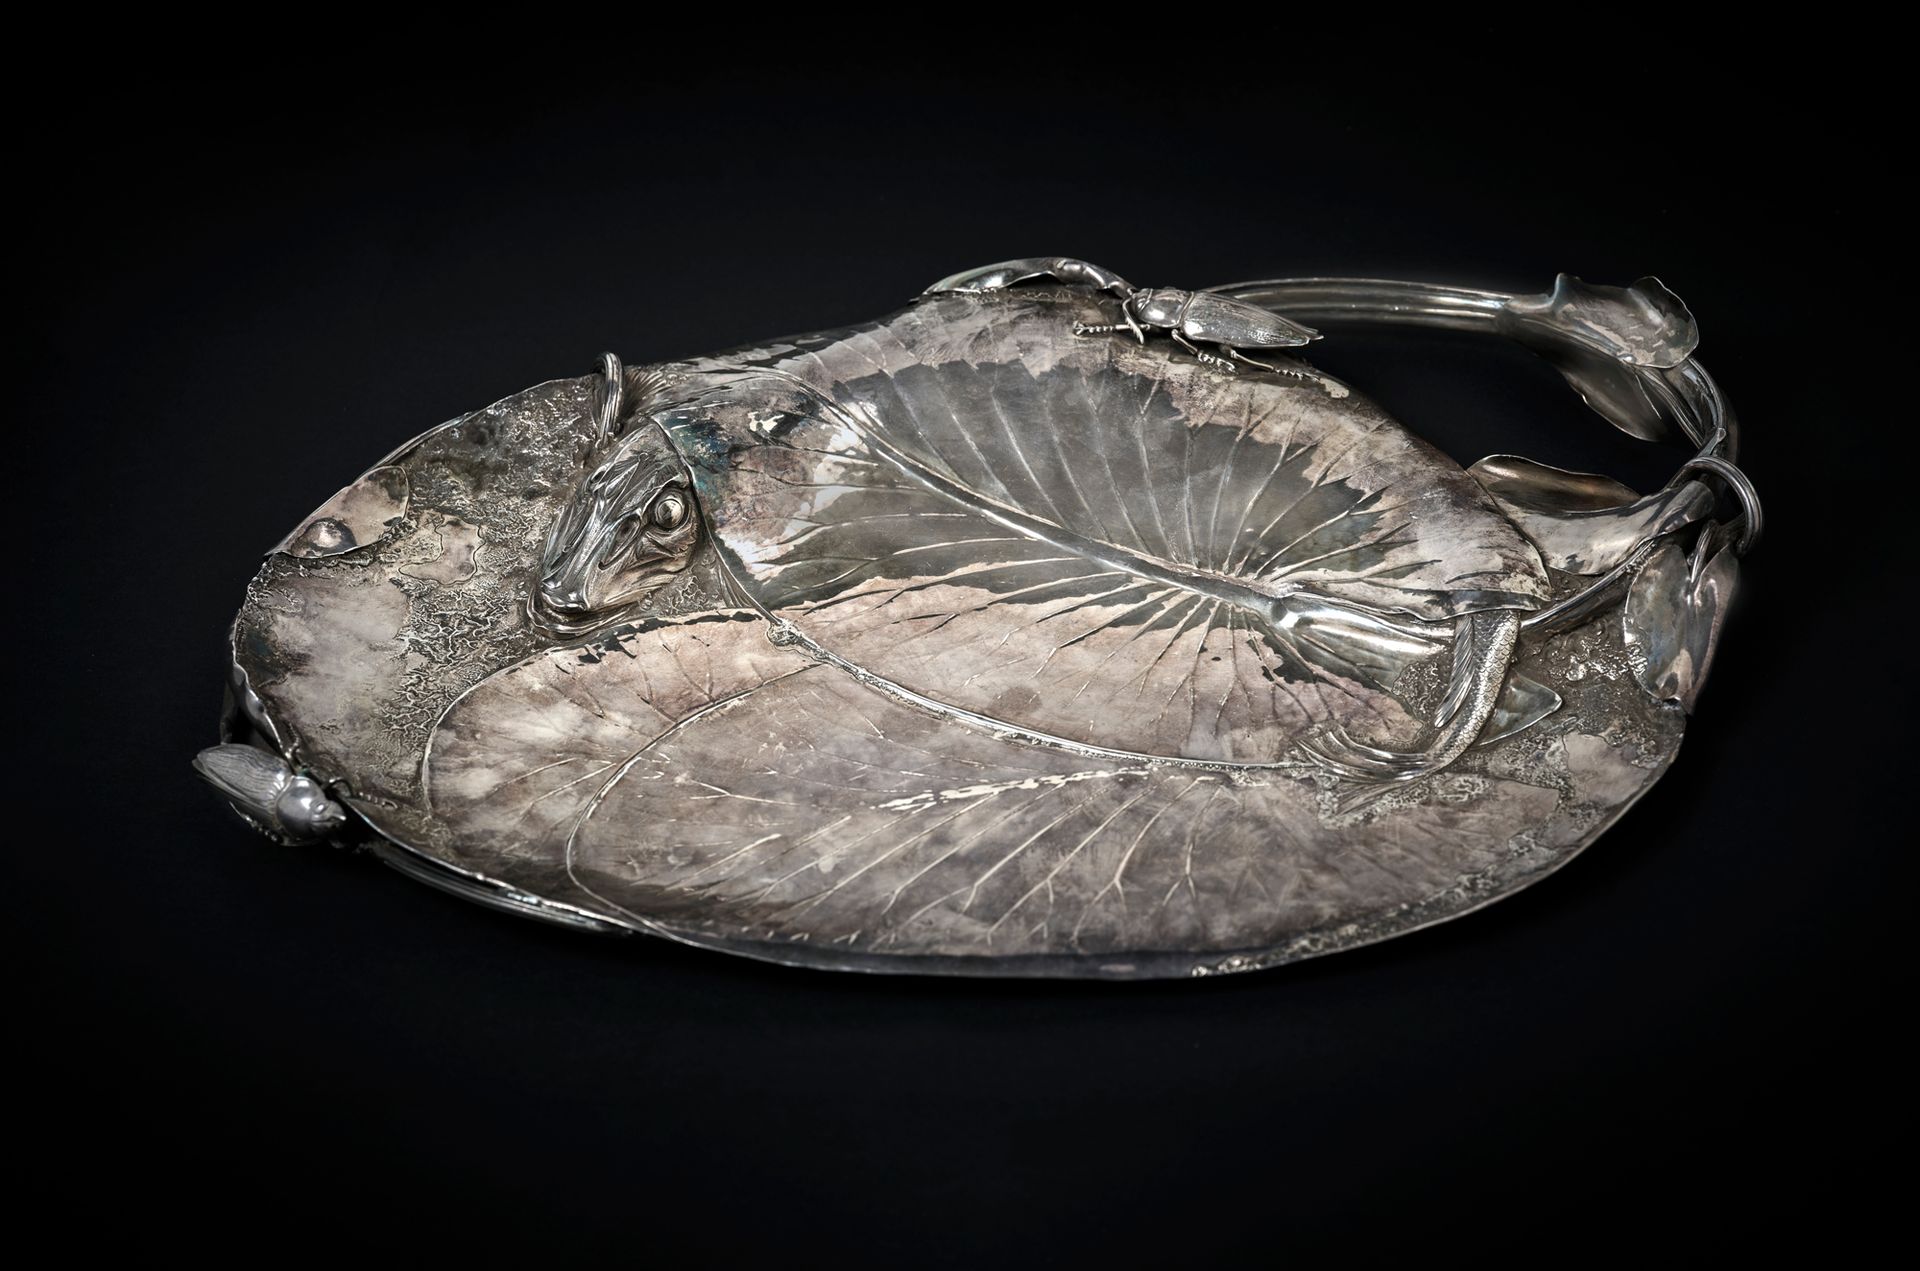 Henri HUSSON (1852-1914) 古纳尔碗，约 1906 年
银碗上装饰着一只鳕鱼，鳕鱼的身体消失在三片睡莲叶下，铠甲般的头部像尾巴一样重新出现&hellip;